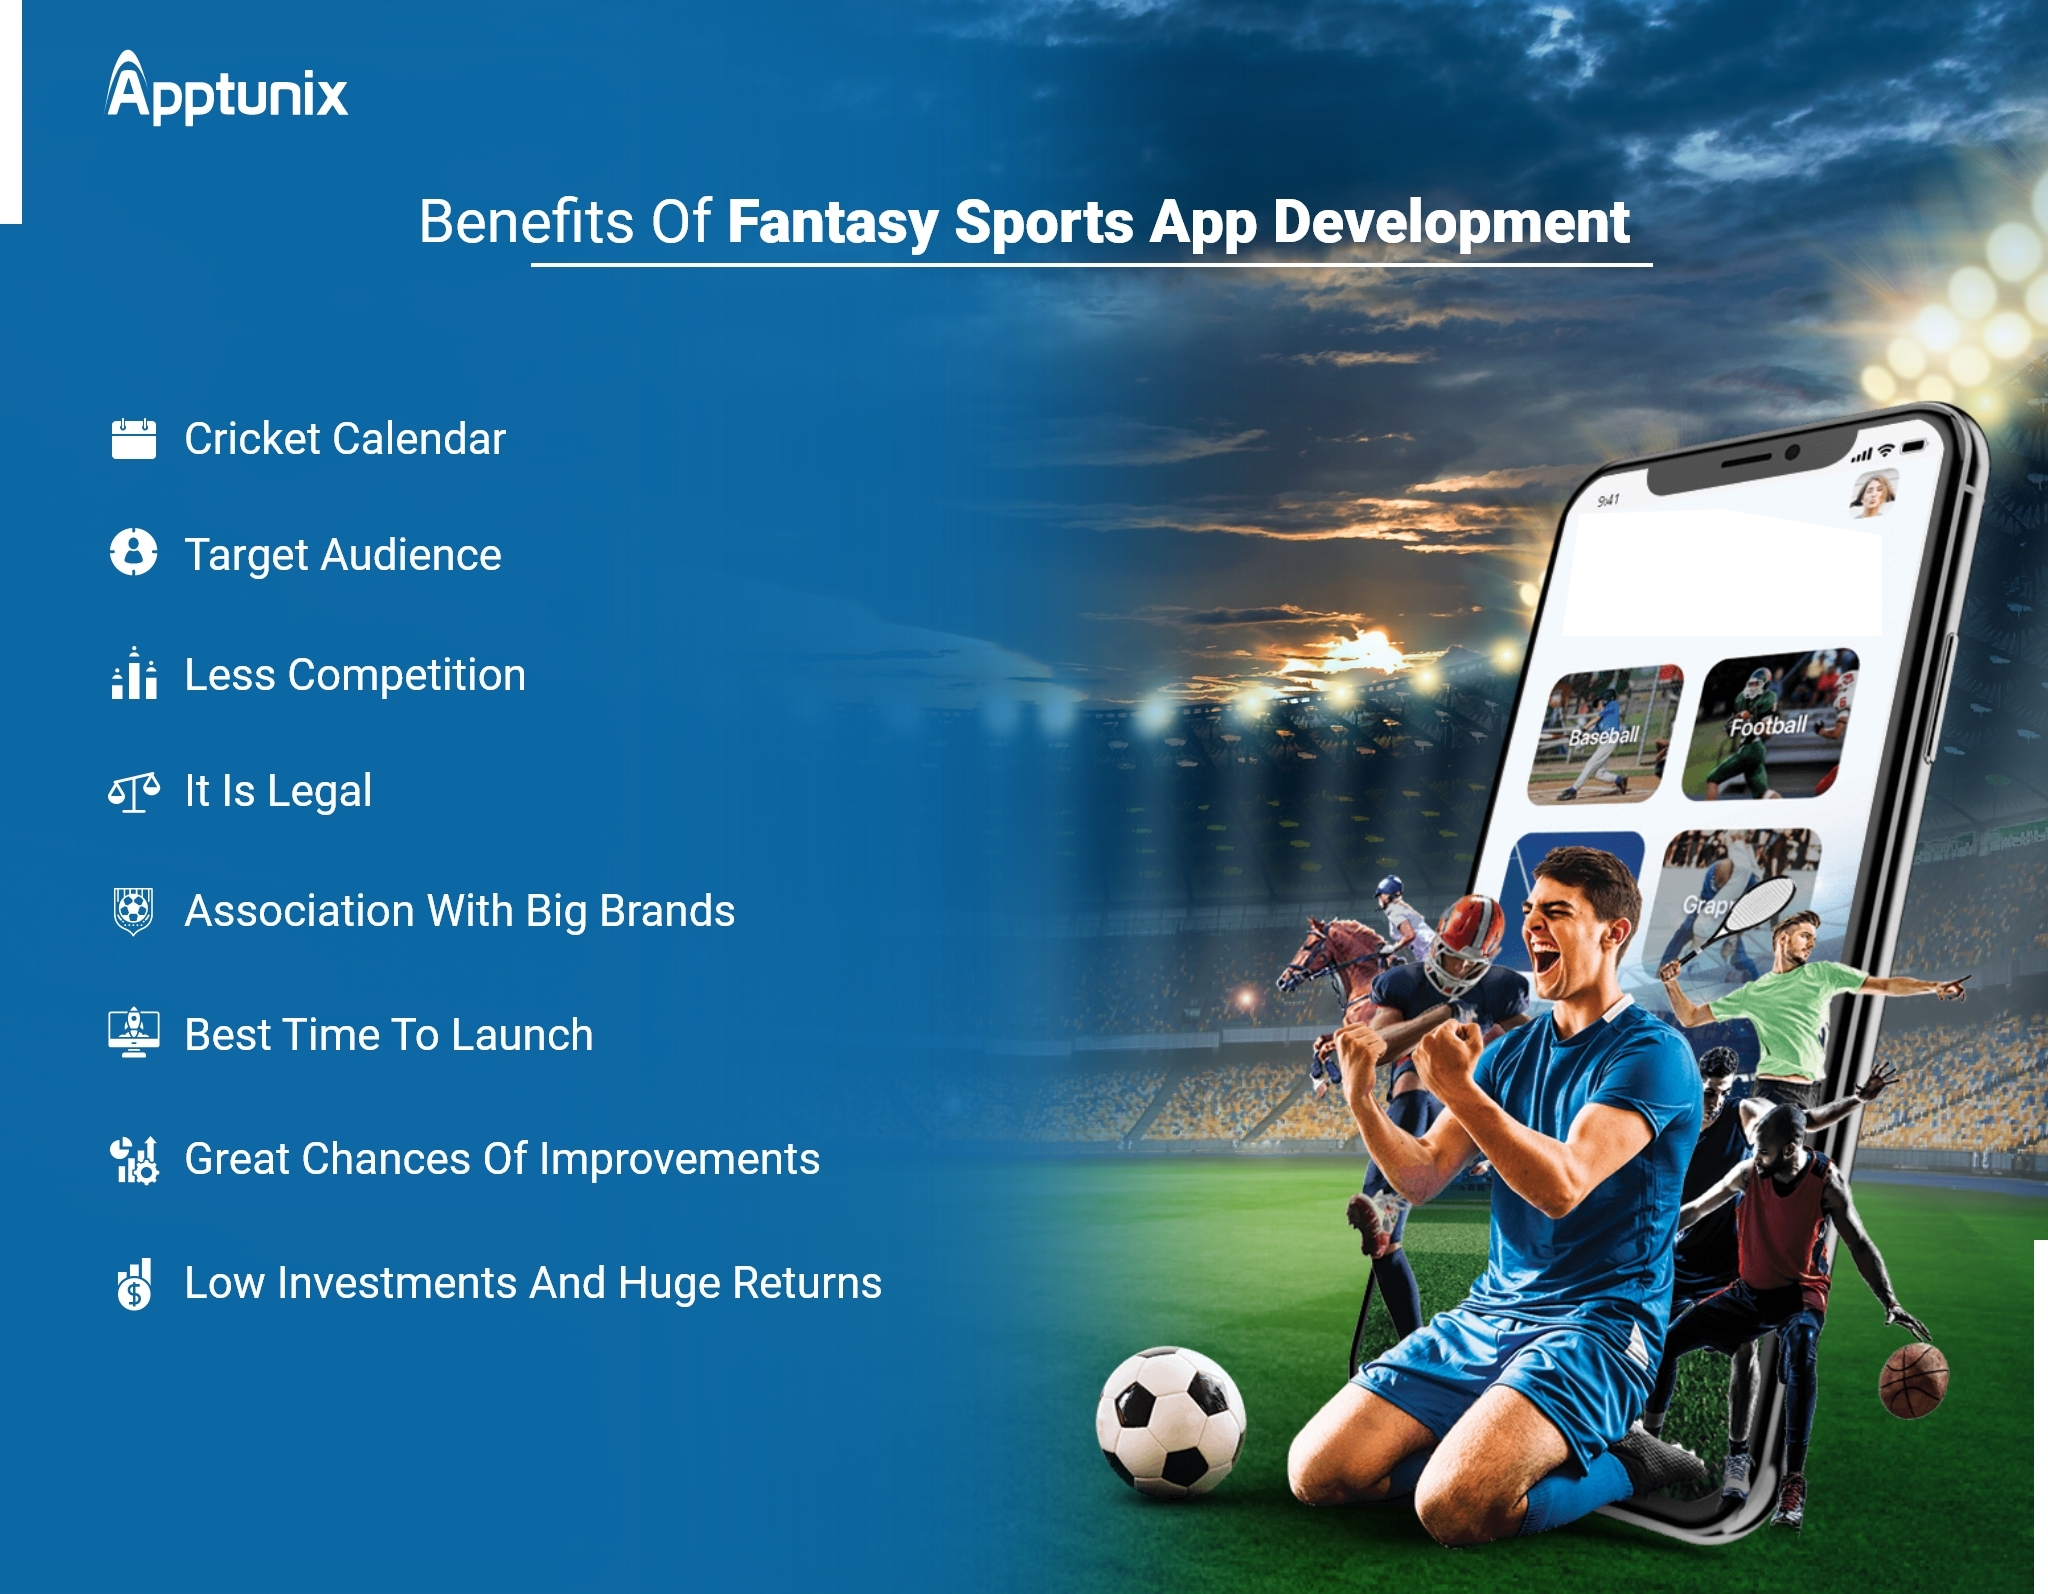 Benefits of Fantasy sports app development